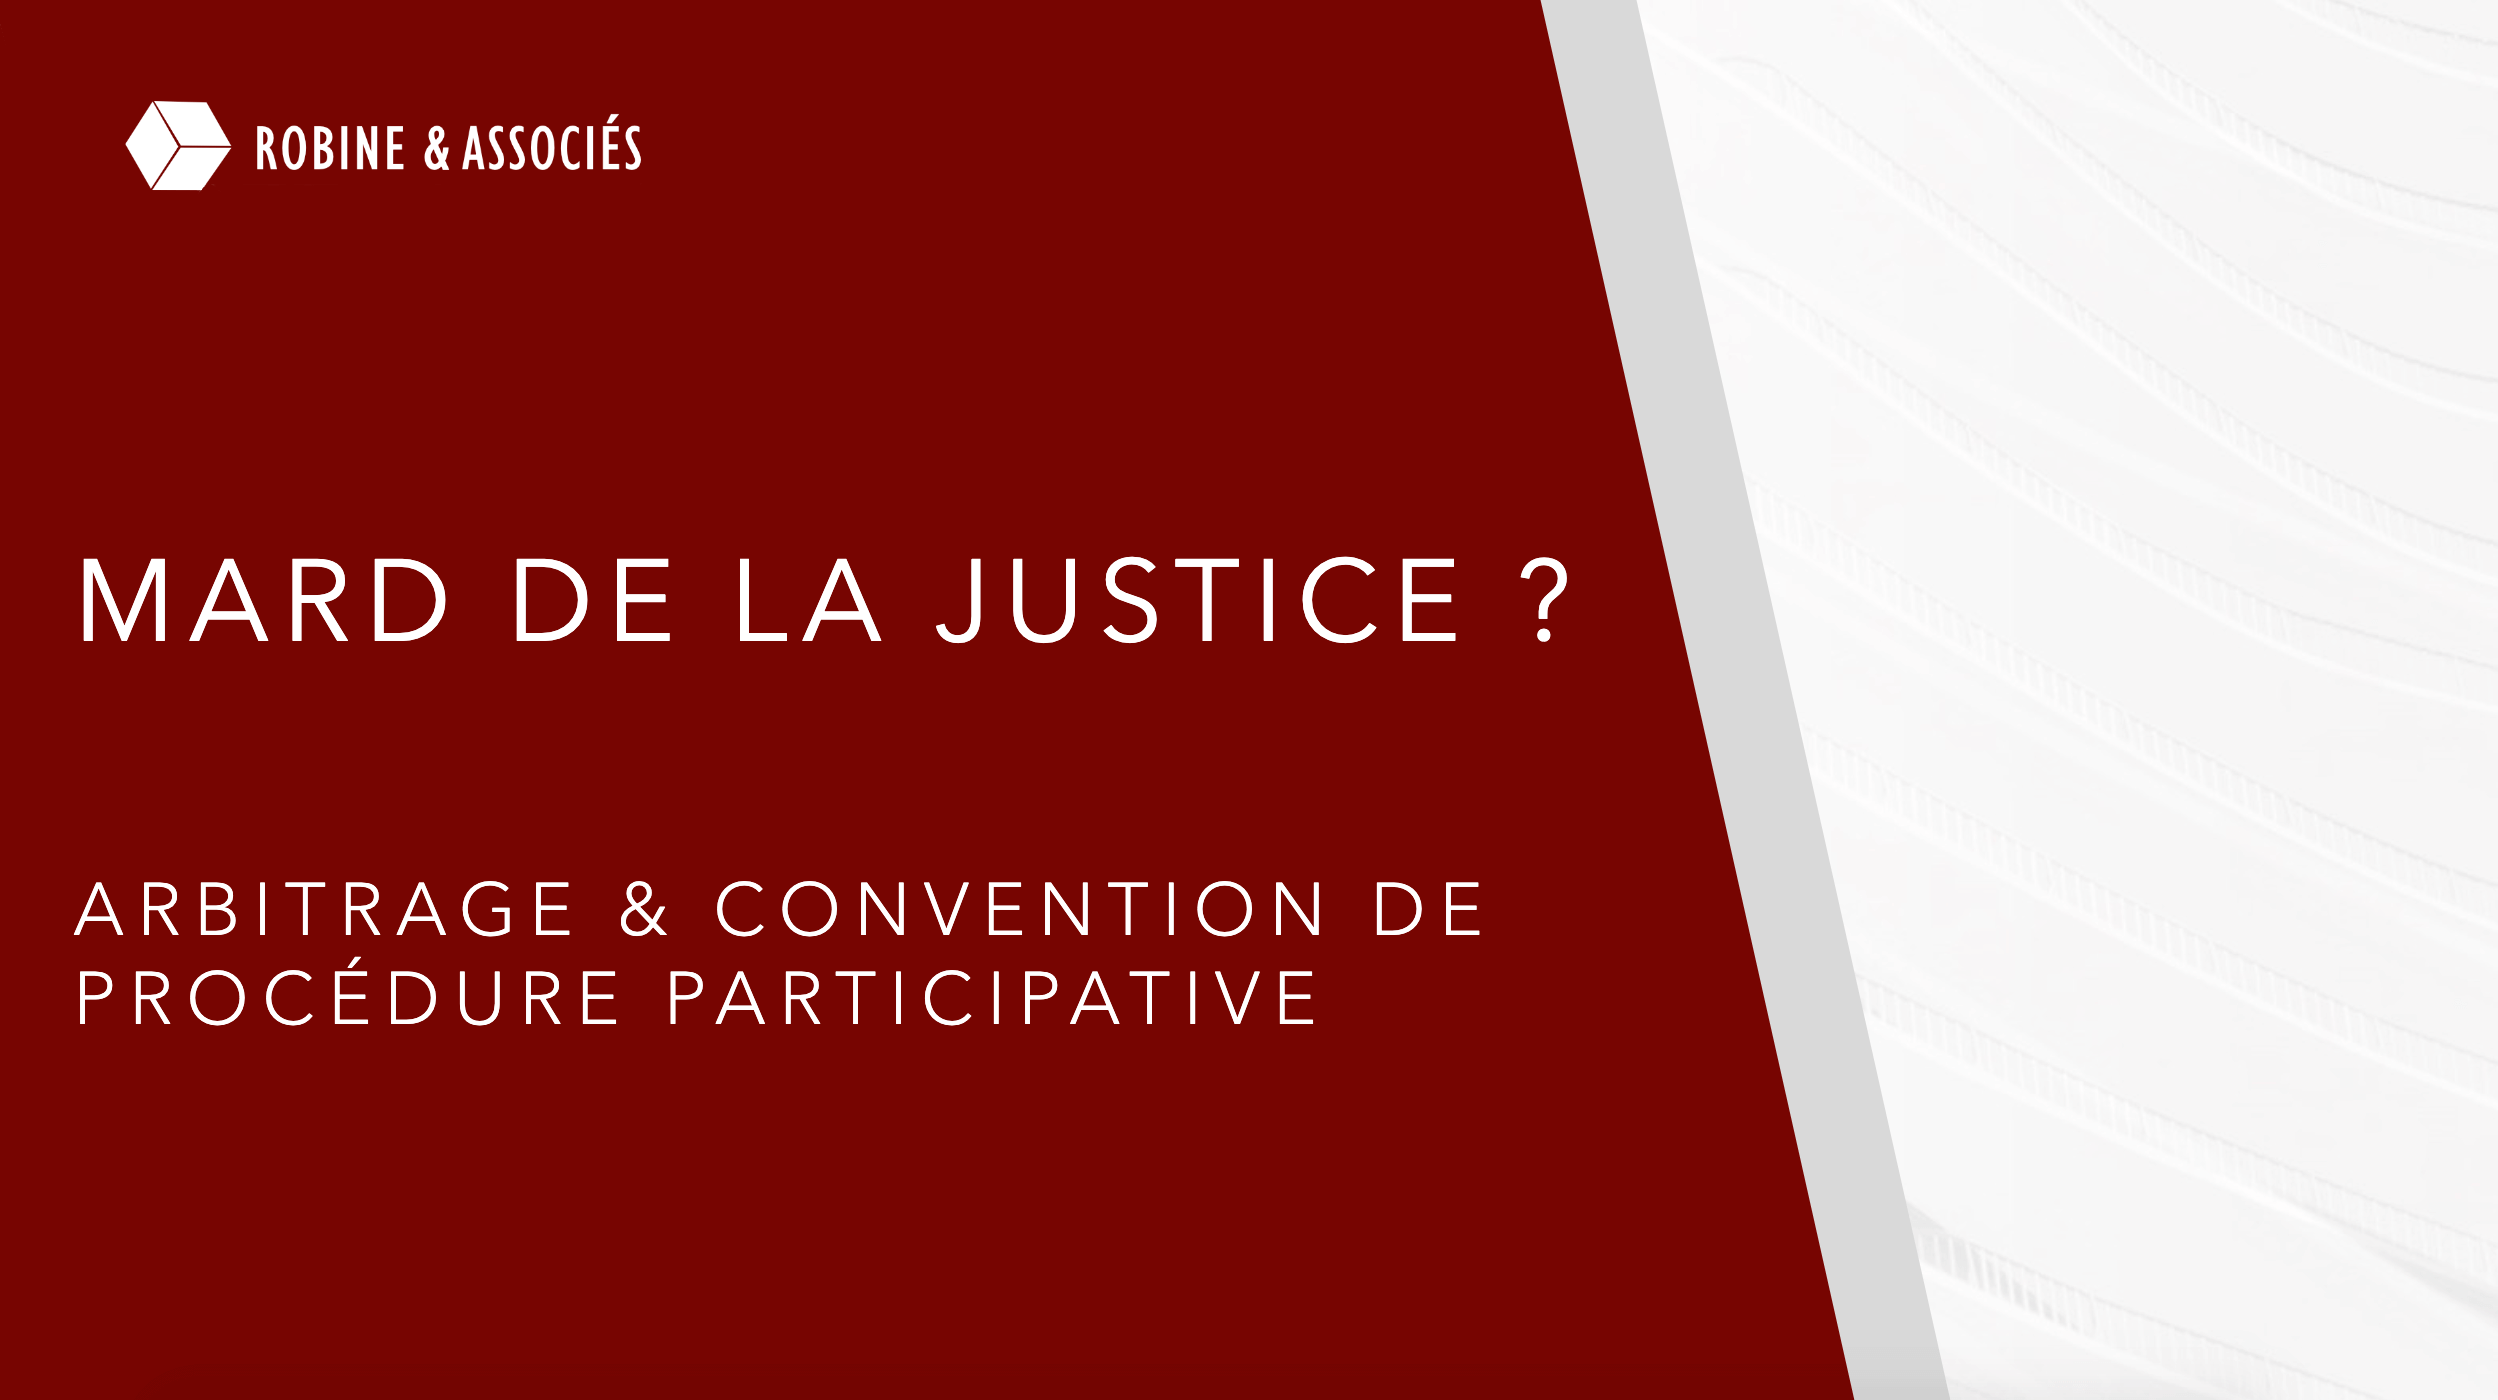 Arbitrage et convention de procédure participative : MARD de la justice ?